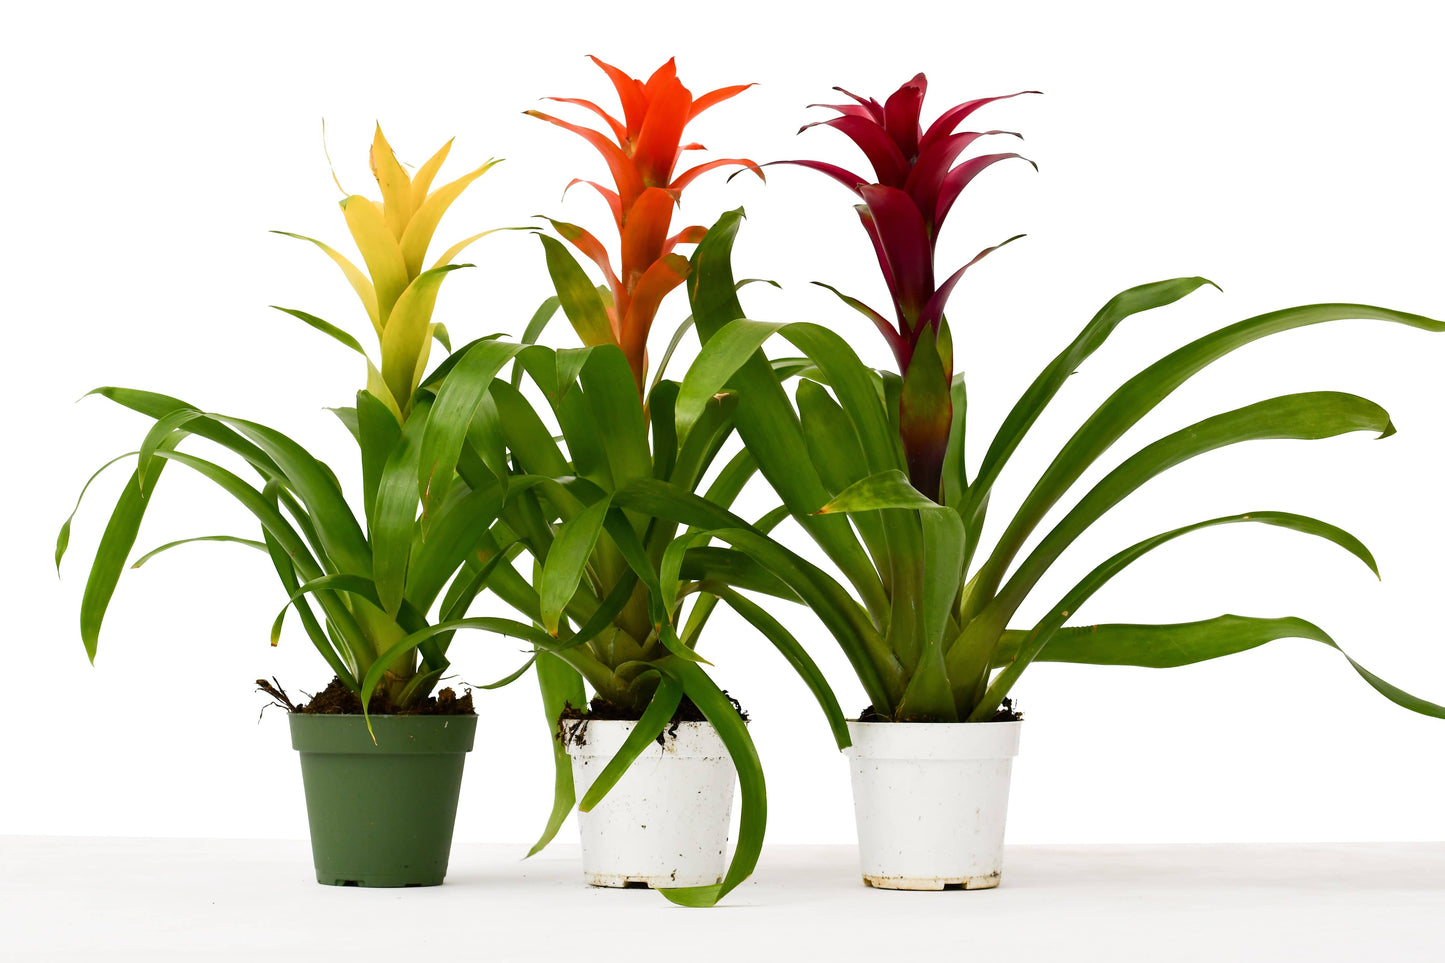 3 Guzmania Bromeliads - Live Plants - 1FT Tall - FREE Care Guide - 4" Pots - Plantonio